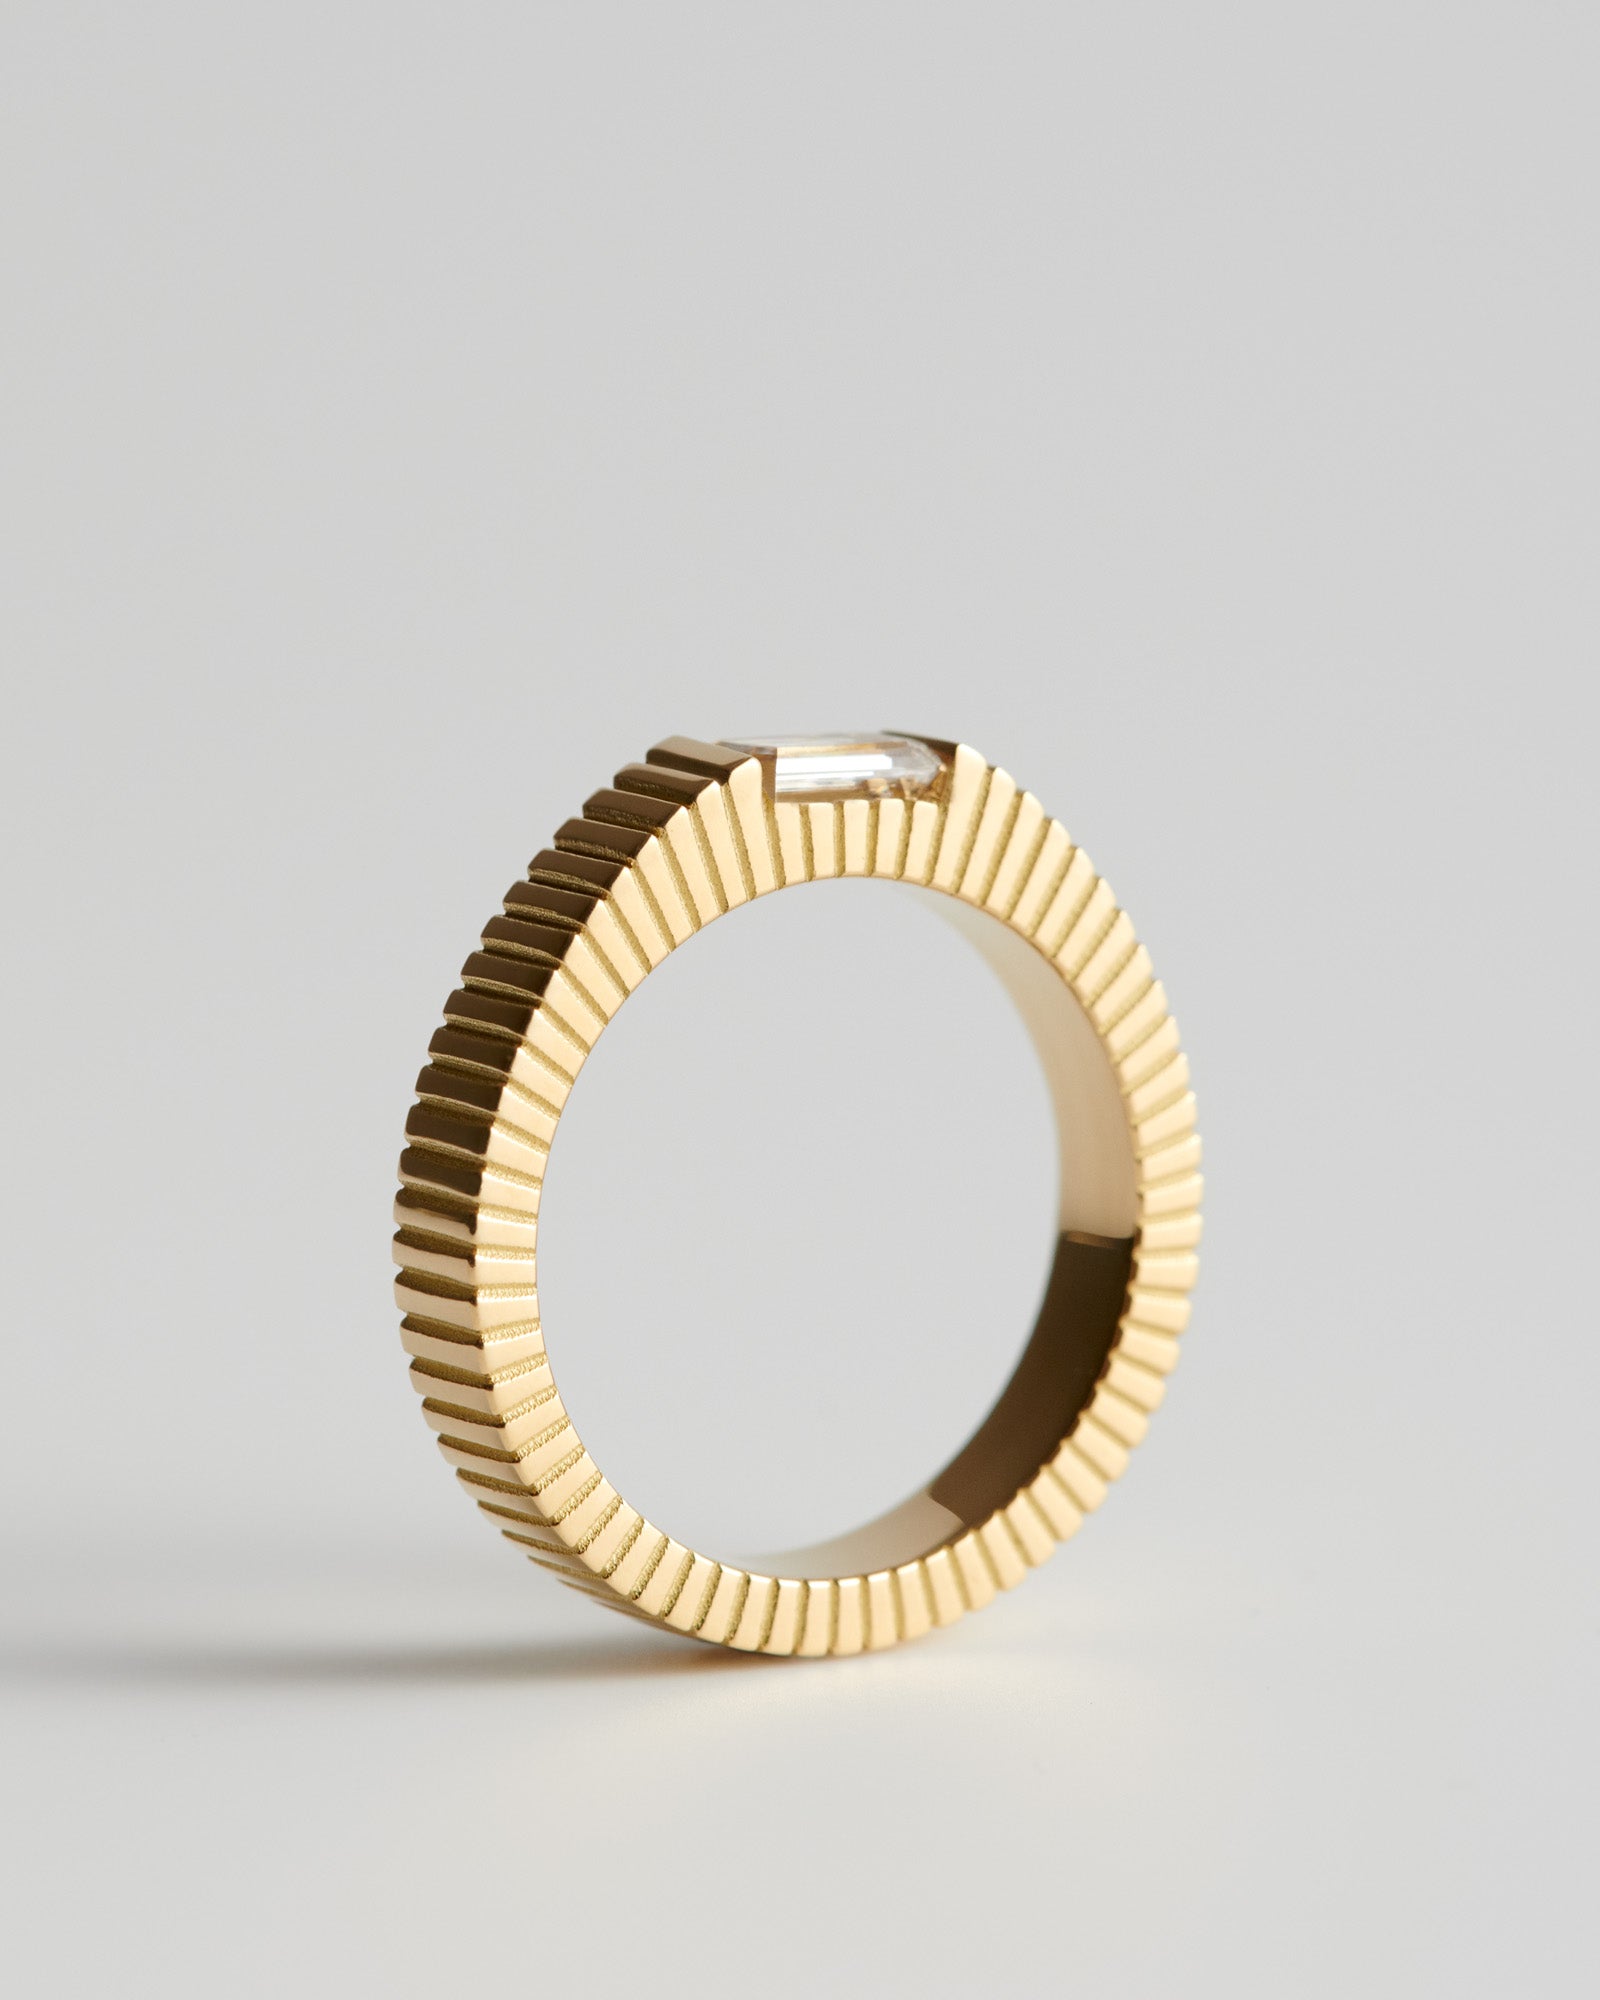 The Venetian Souvenir 05 Ring